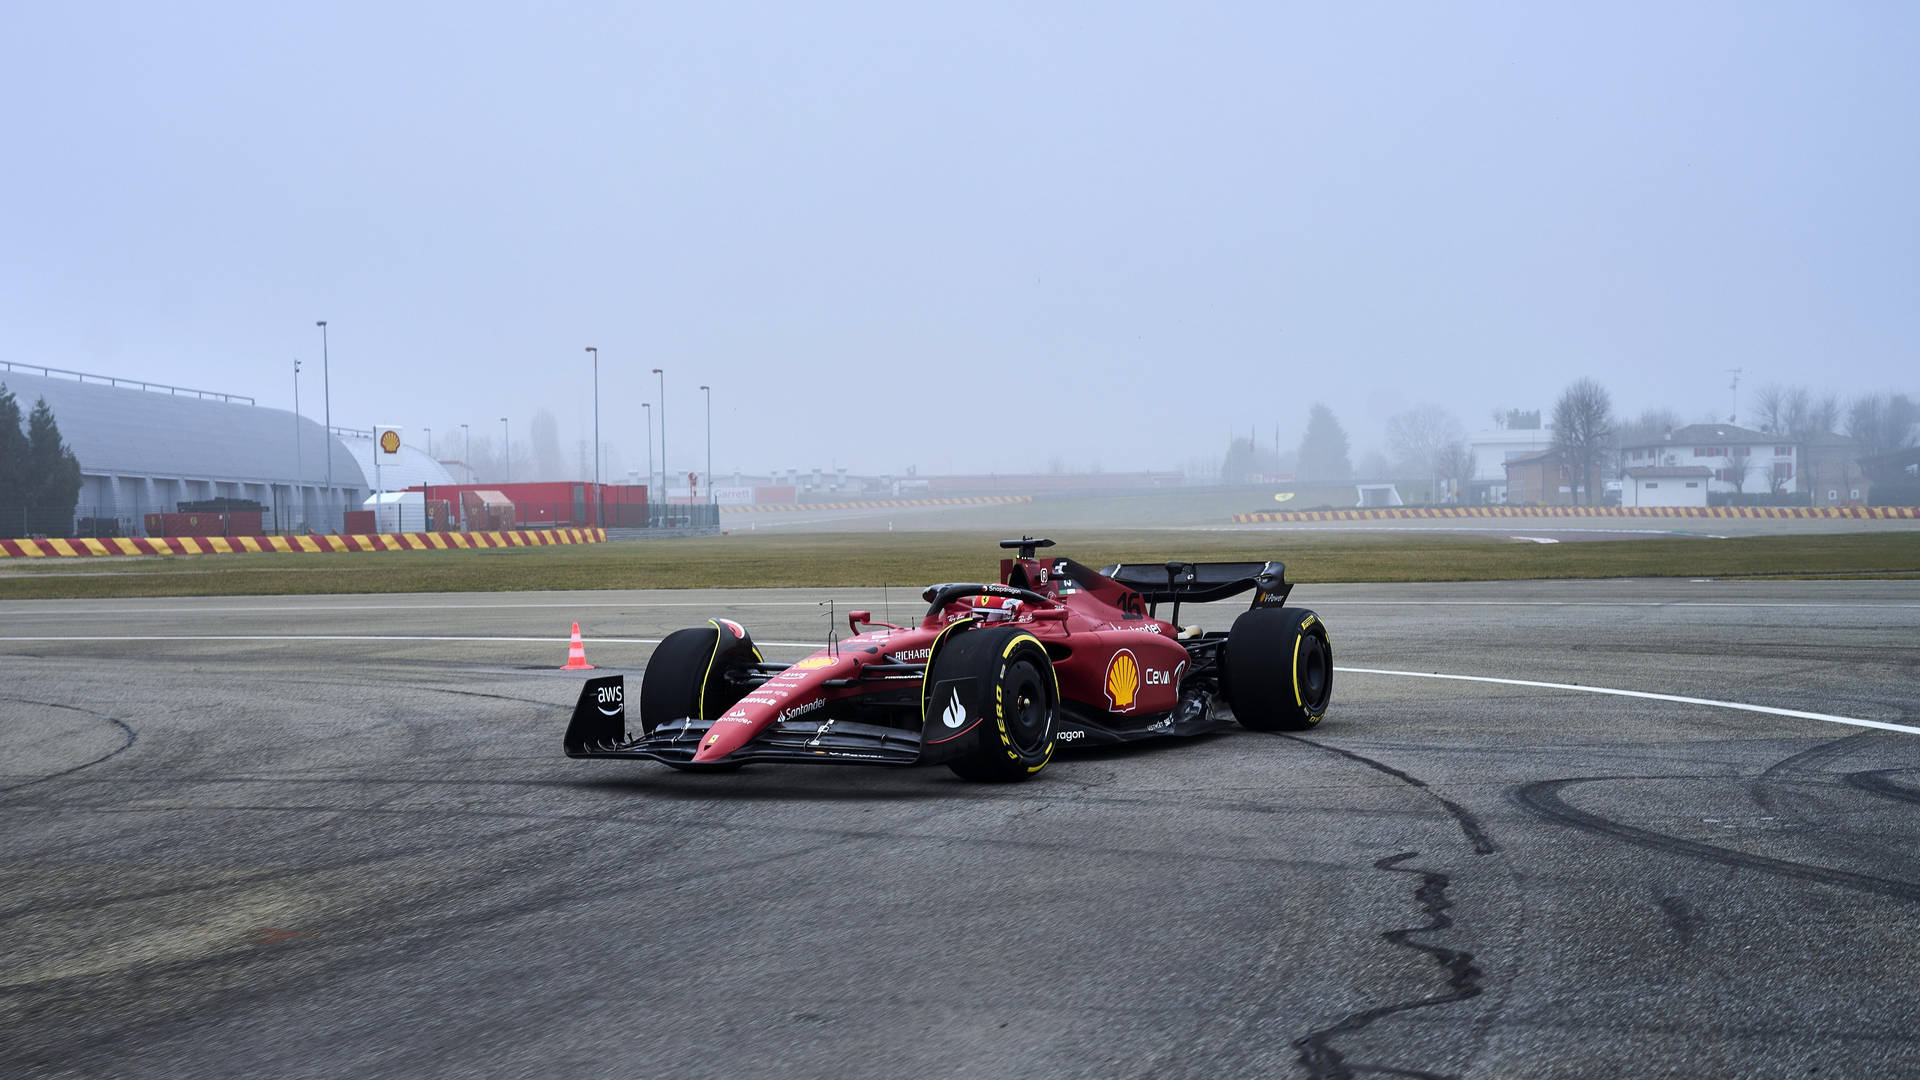 Ferrari F1 Car Driving On A Track In The Fog Wallpaper